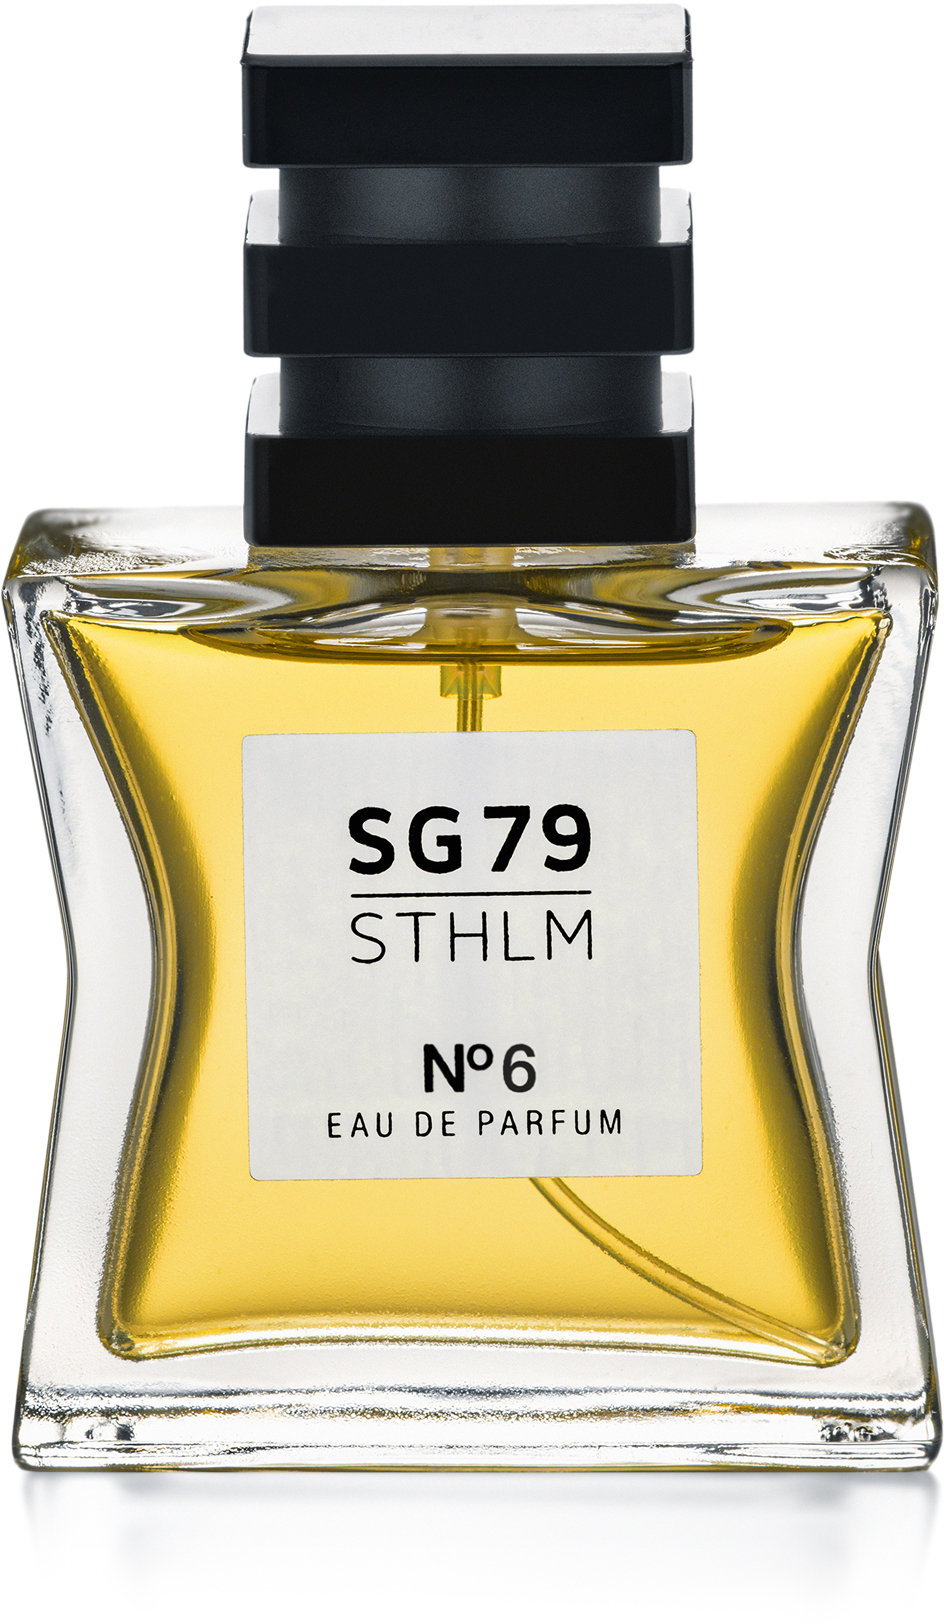 sg79|sthlm n° 6 woda perfumowana 30 ml   